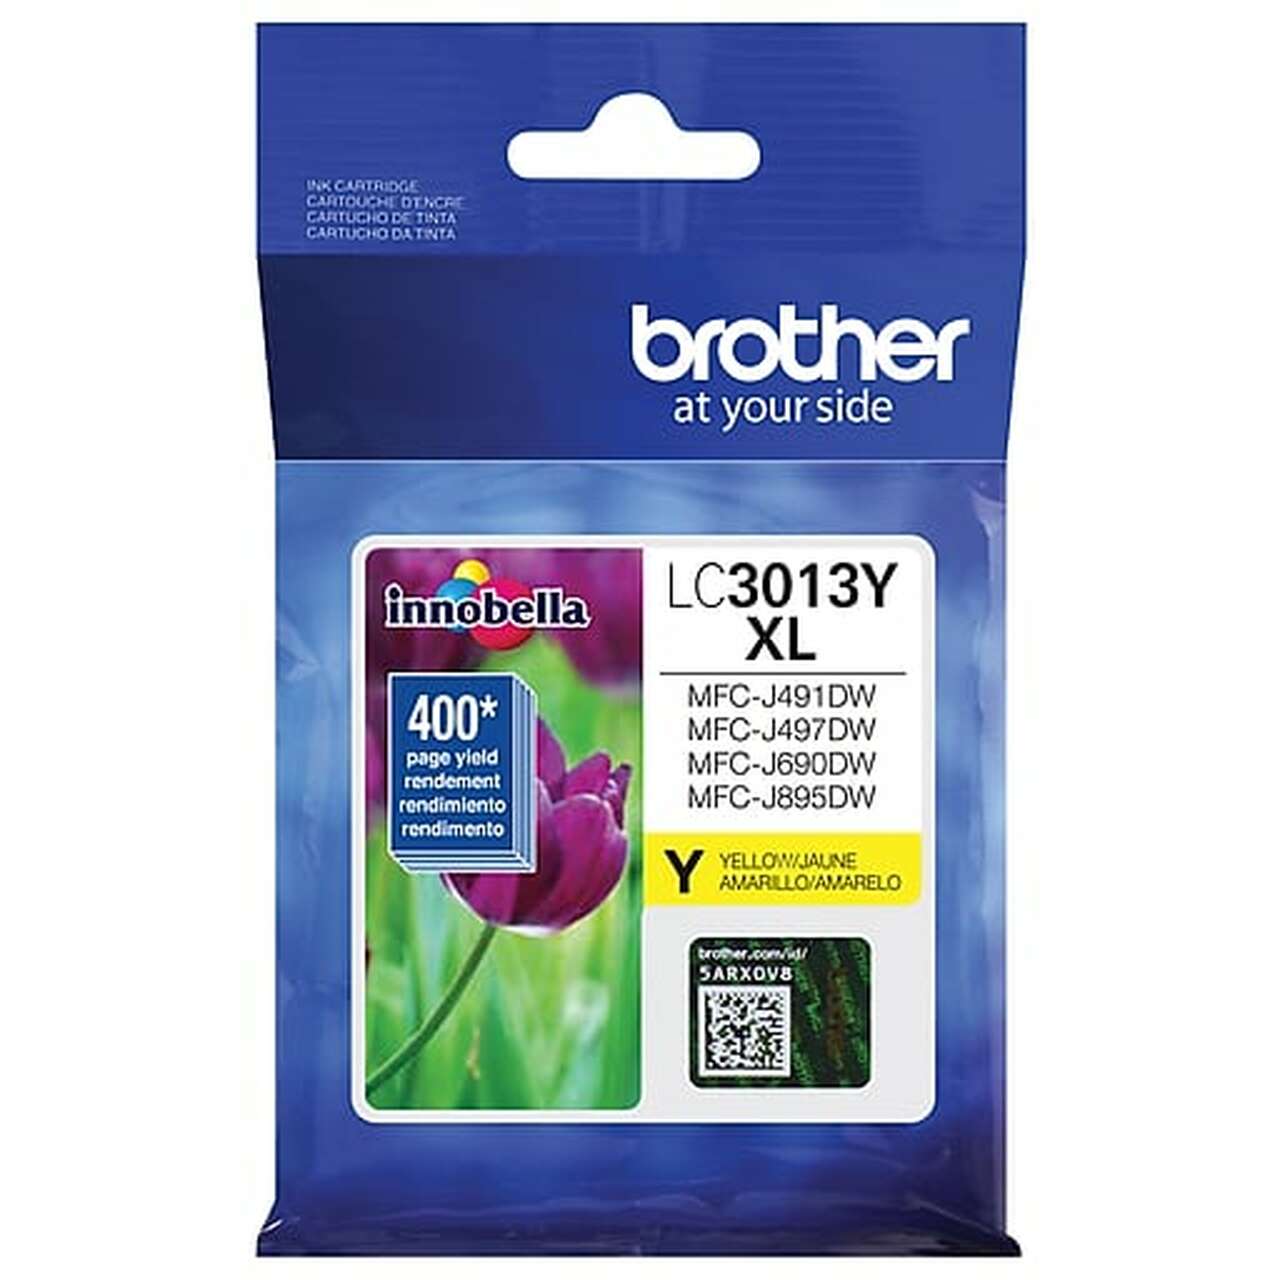 Absolute Toner Brother Genuine OEM LC3013YS Yellow Ink Cartridge Standard Yield Original Brother Cartridges